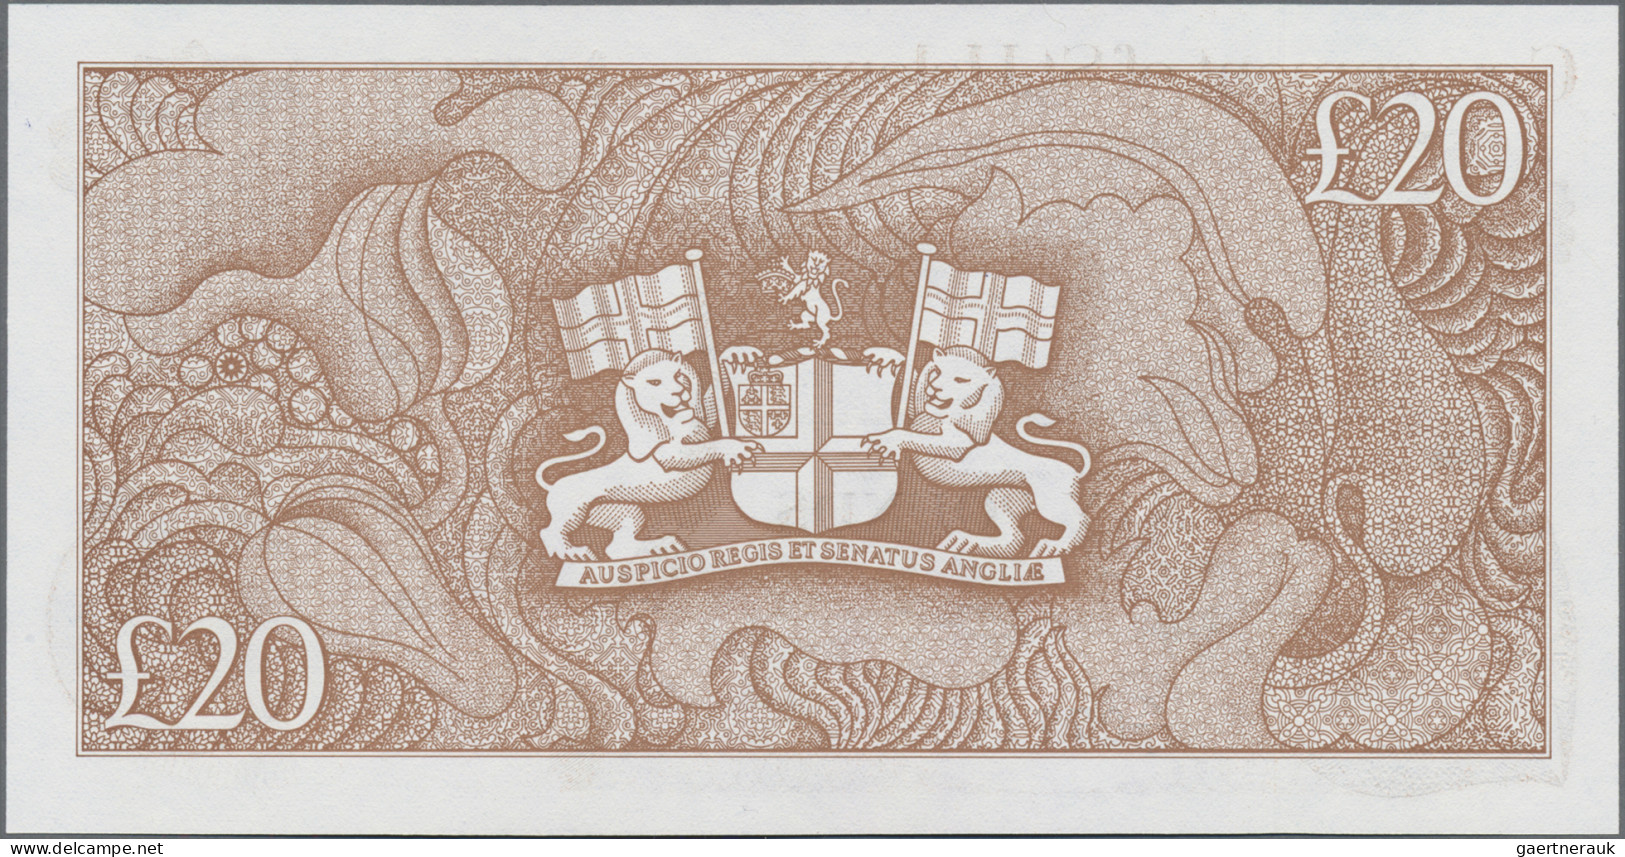 St. Helena: Government Of Saint Helena, Lot With 4 Banknotes, Series 1979-1988, - Isla Santa Helena